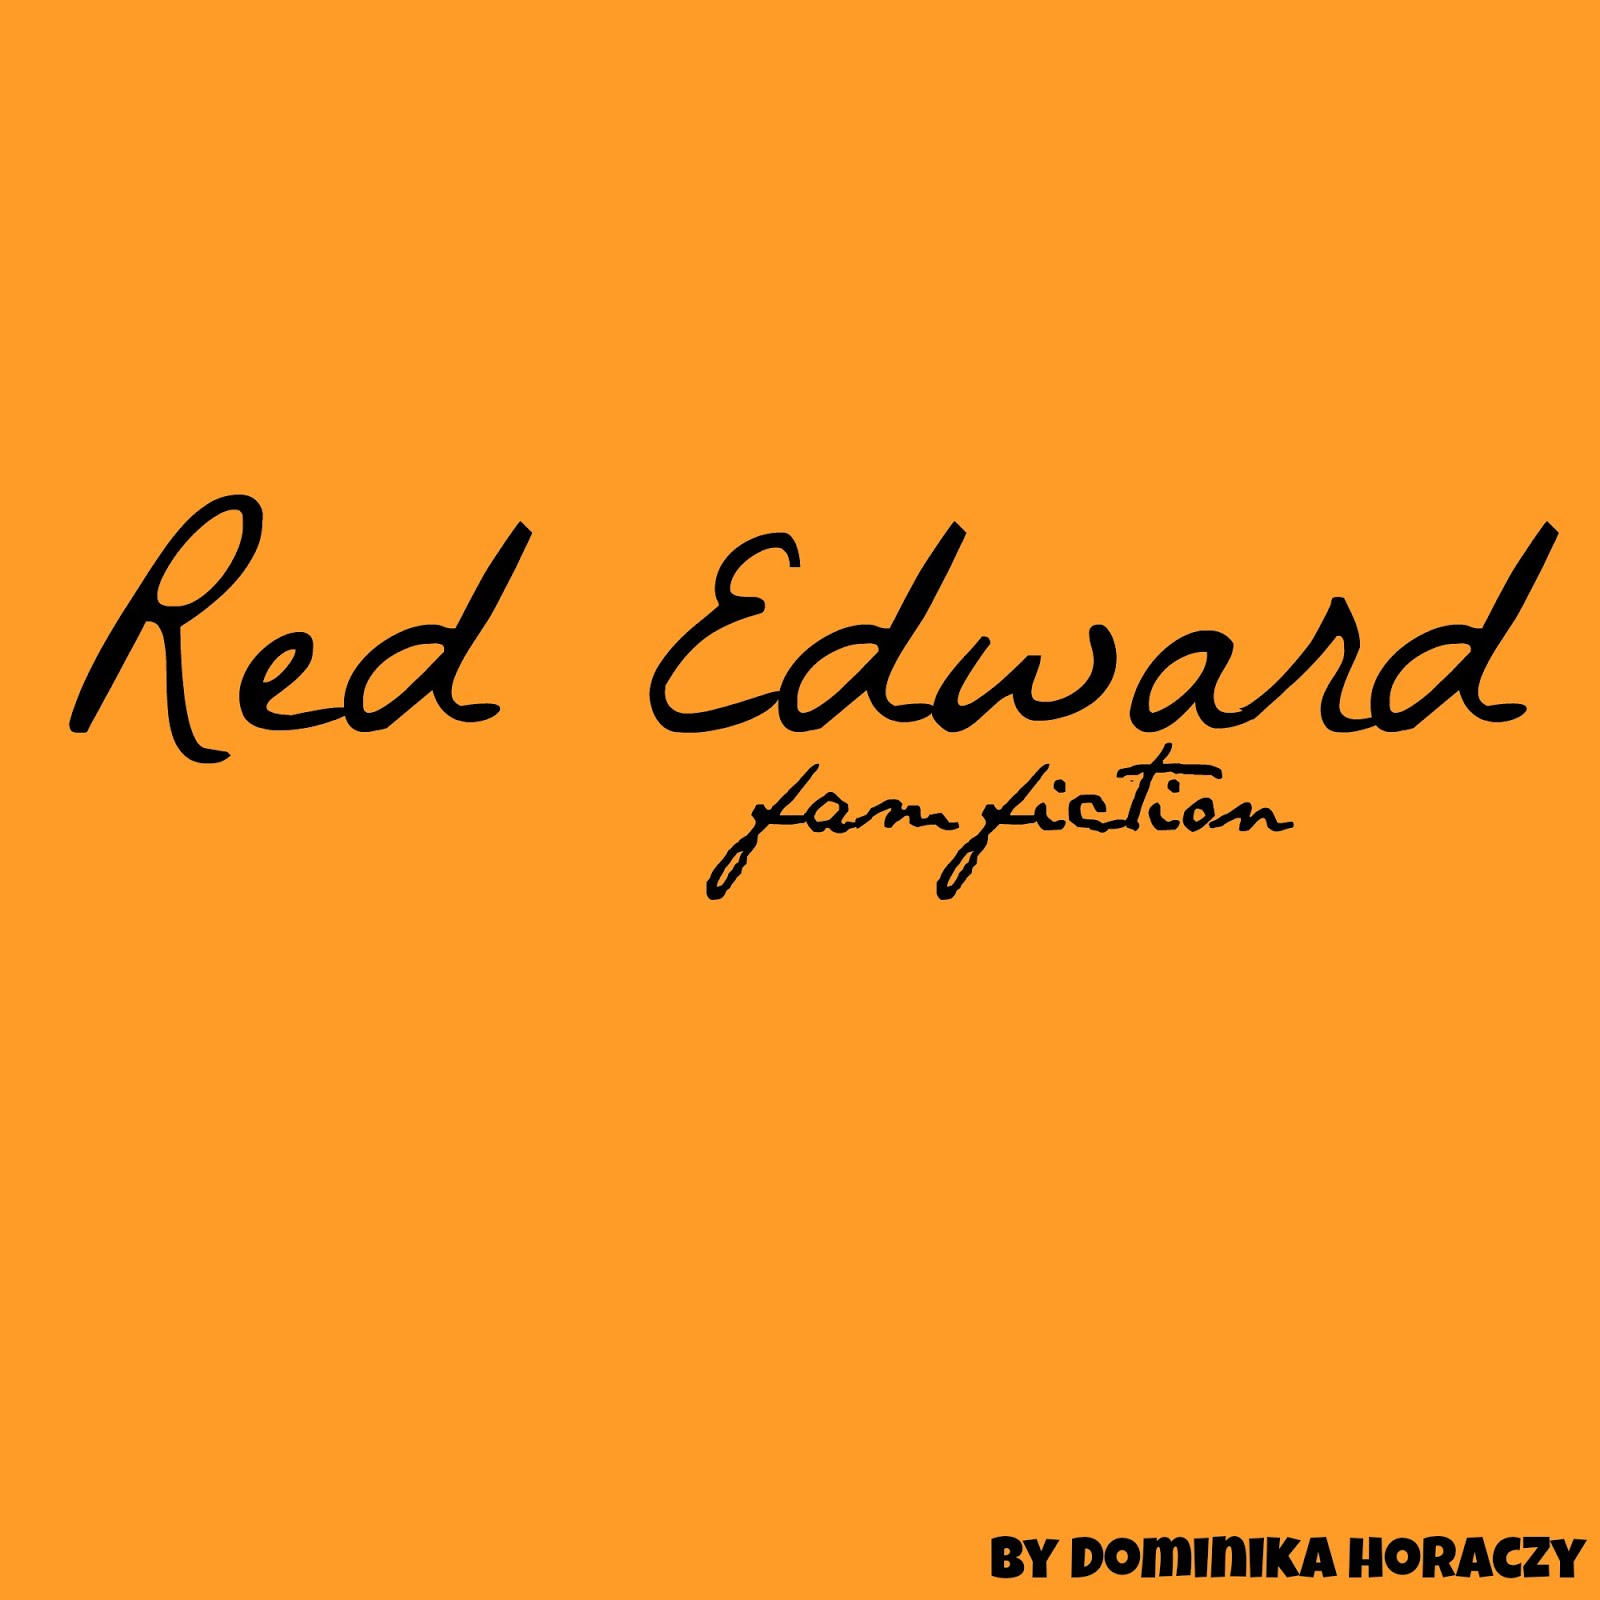 Red Edward